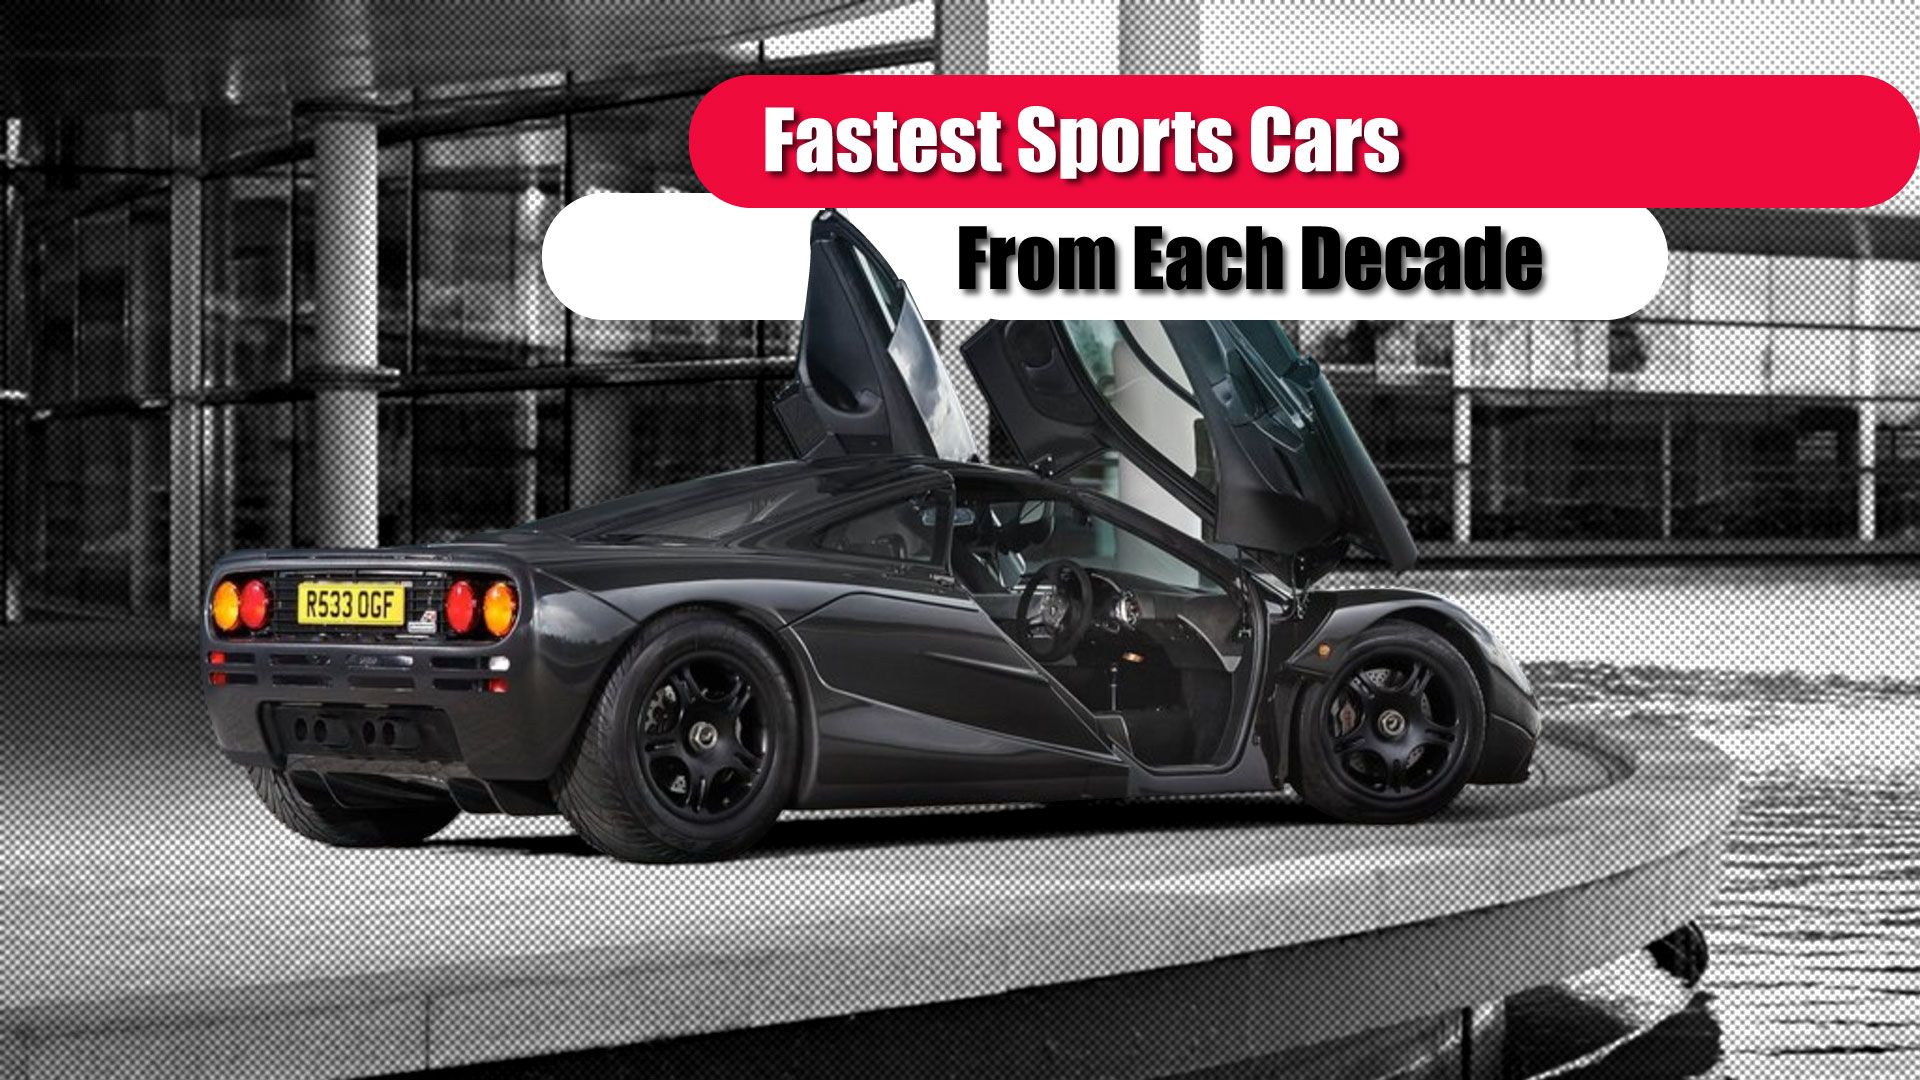 fast-sports-cars-decade